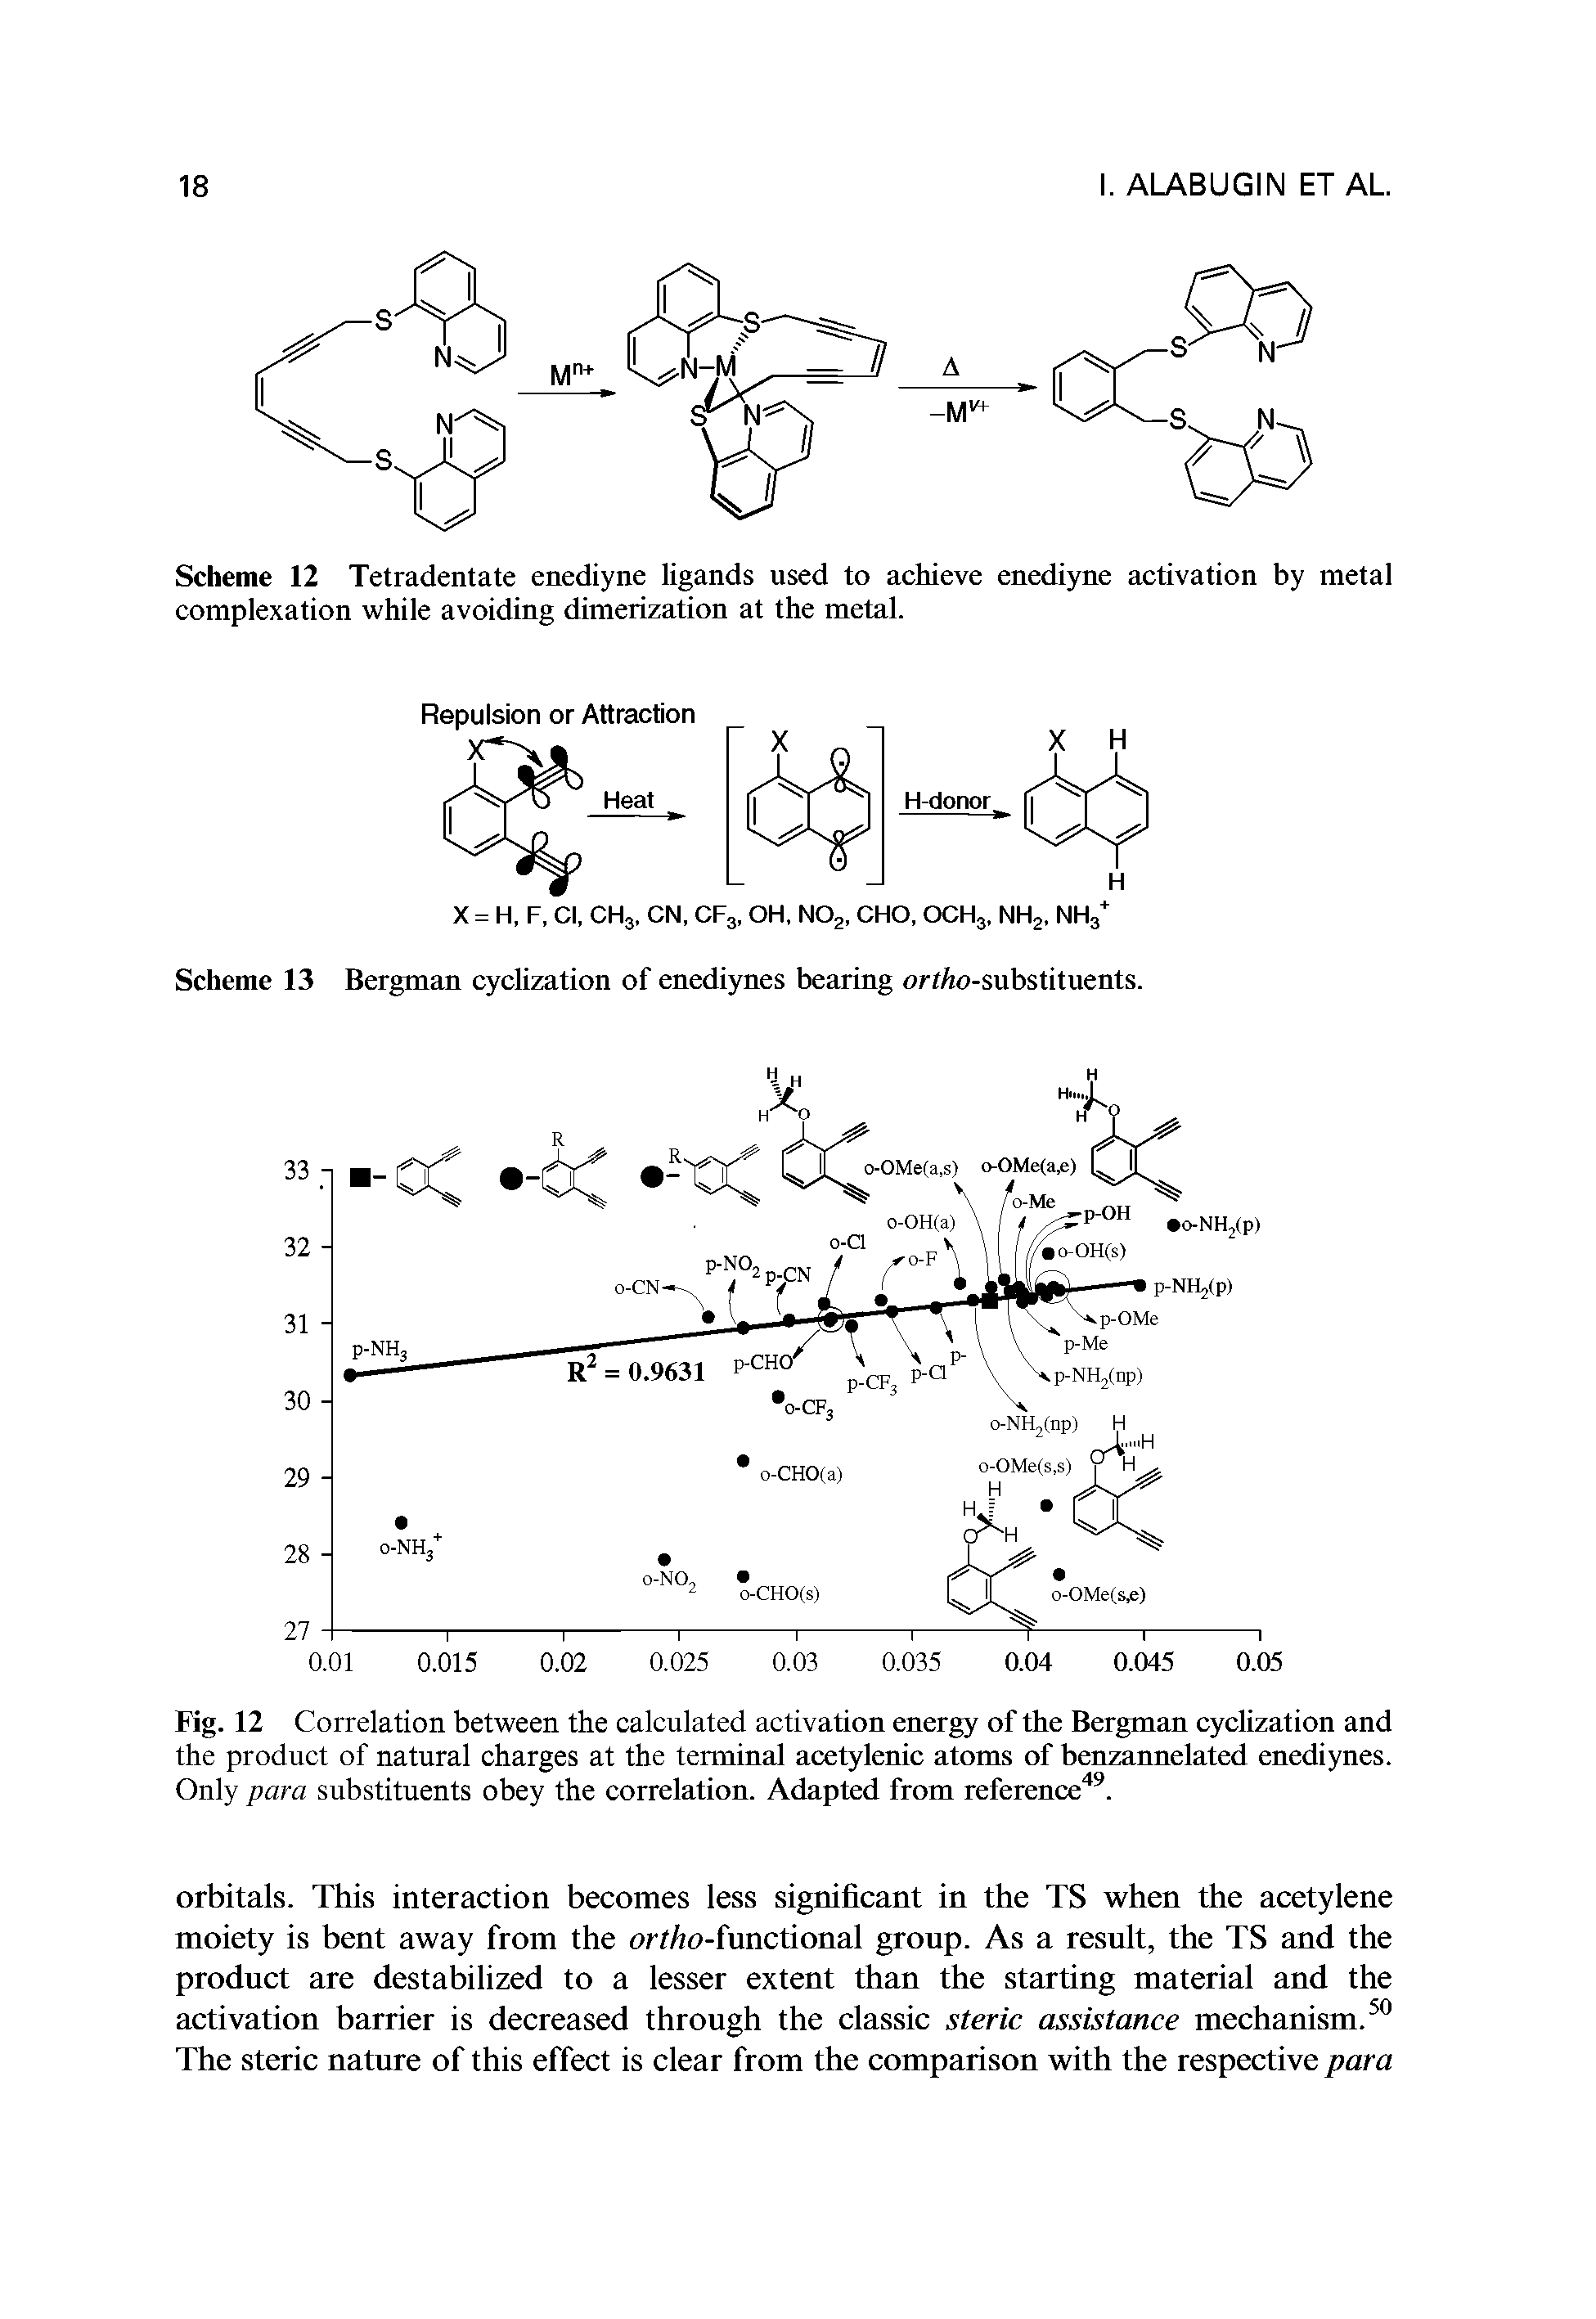 Scheme 13 Bergman cyclization of enediynes bearing ort/zo-substituents.